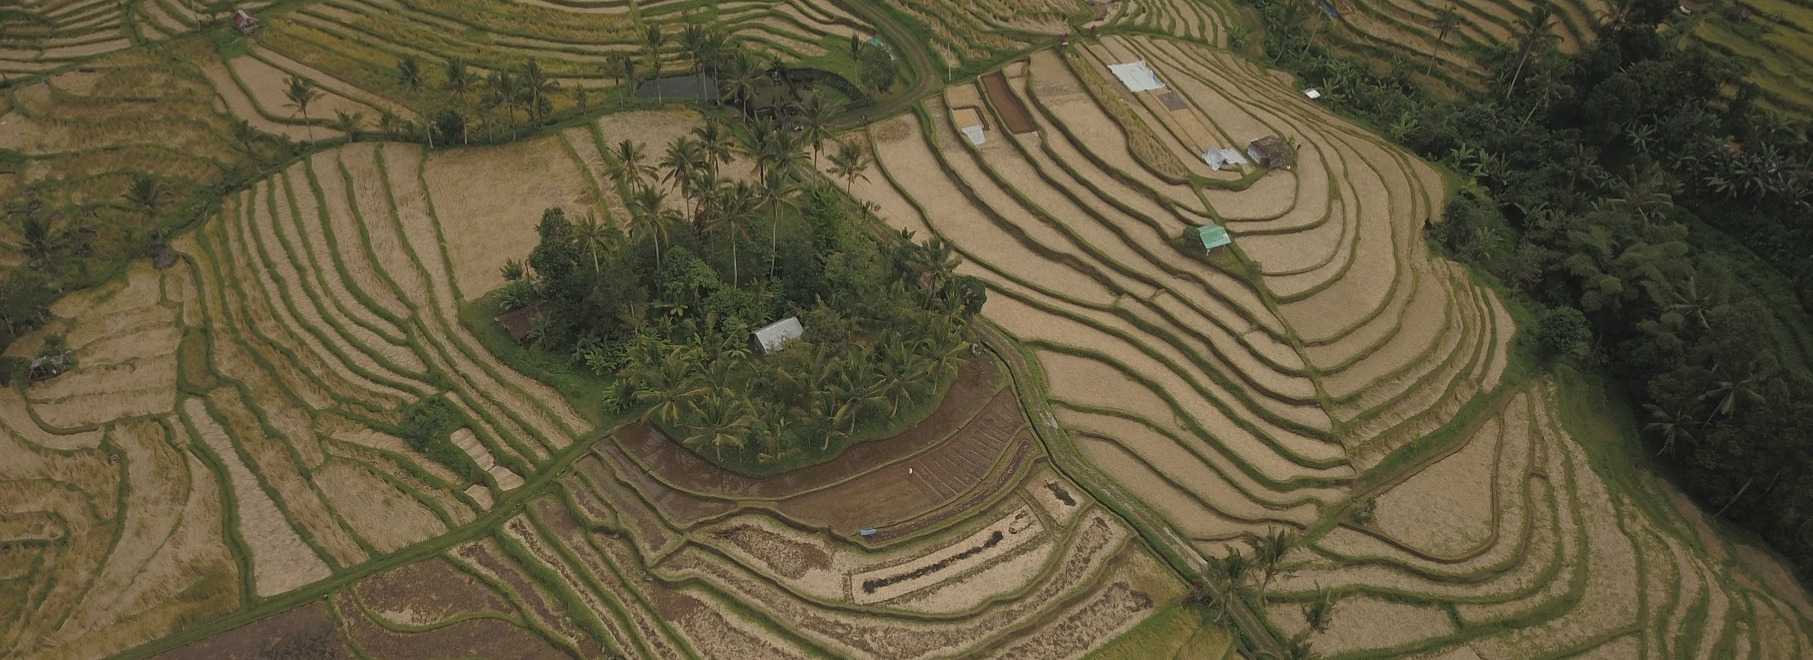 Jatiluwih rice terraces